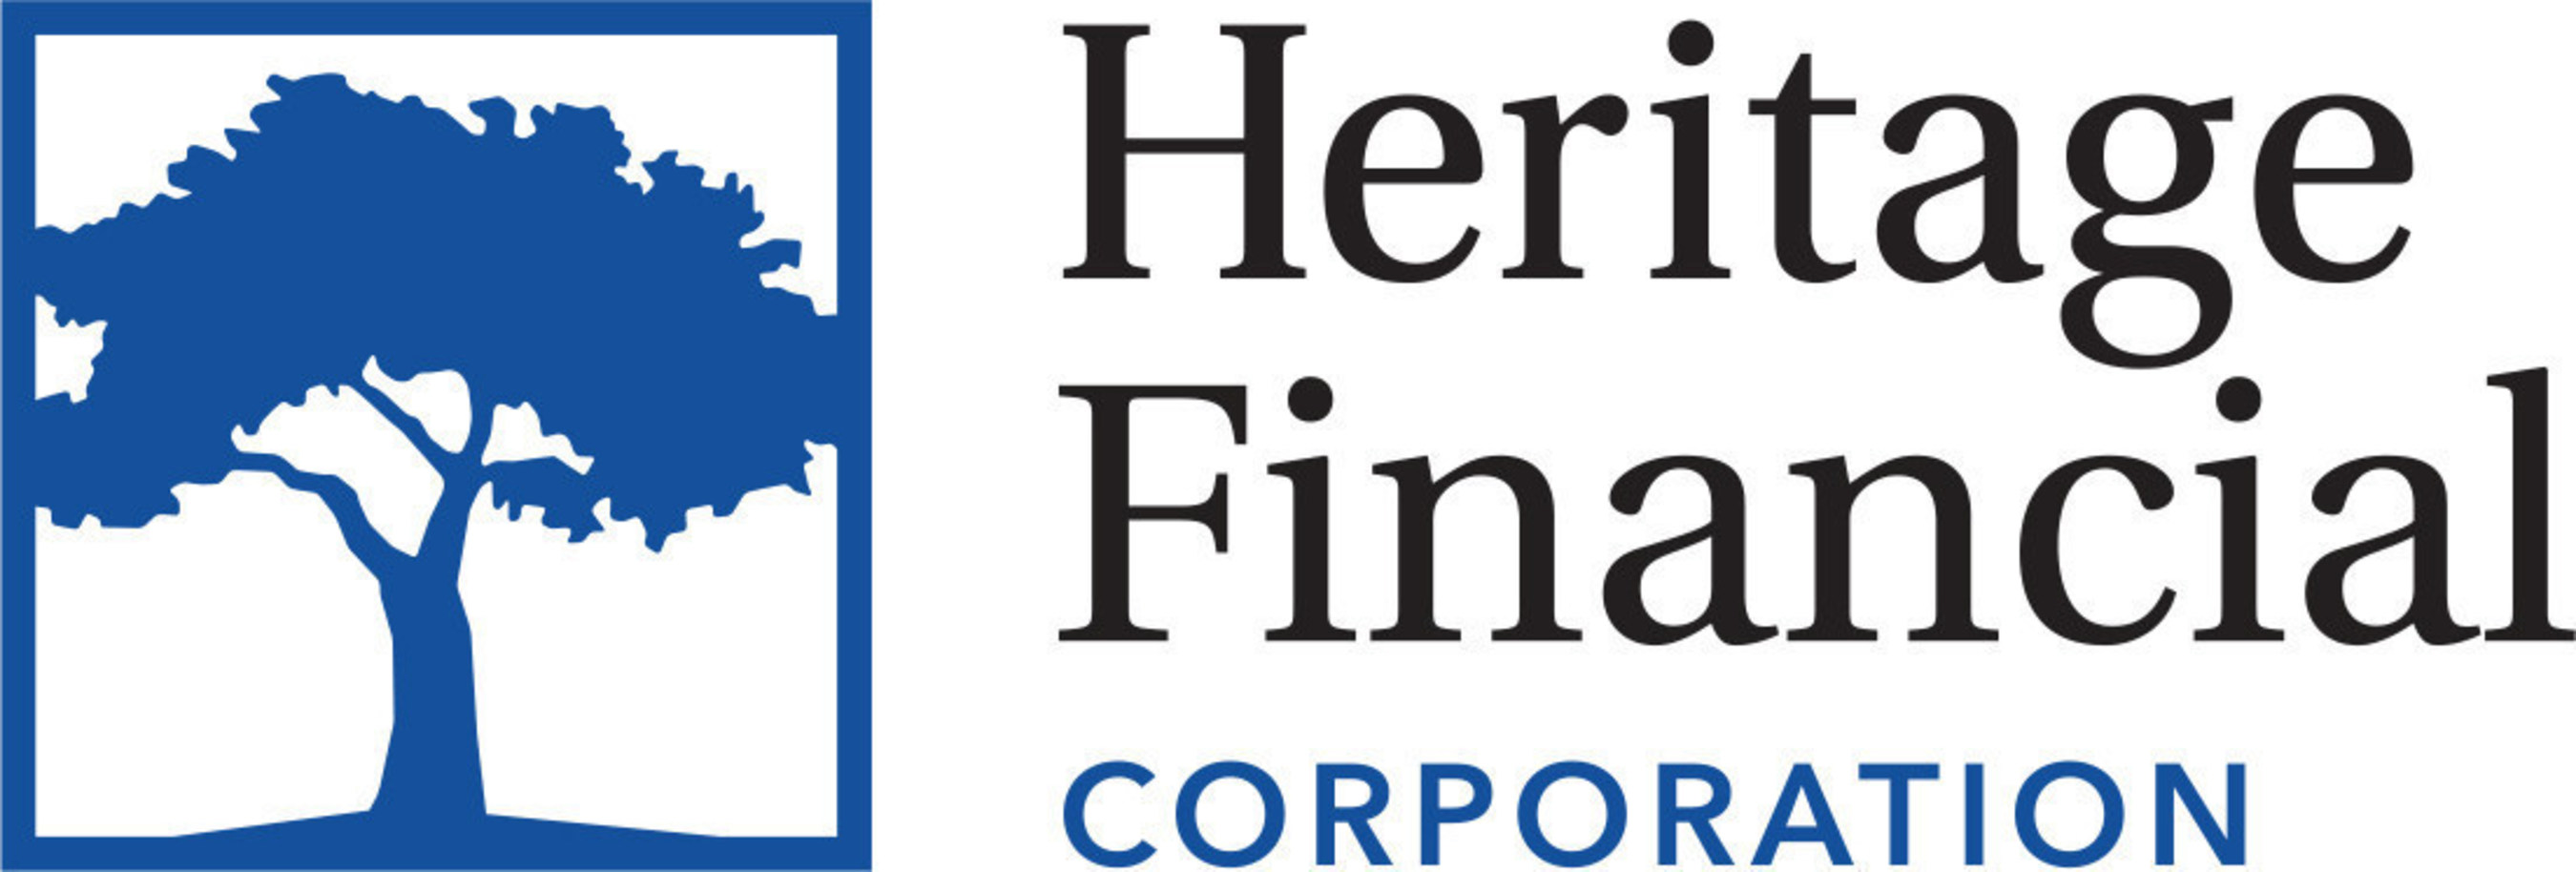 Heritage Financial Corporation (PRNewsFoto/Heritage Financial Corporation) (PRNewsFoto/Heritage Financial Corporation)